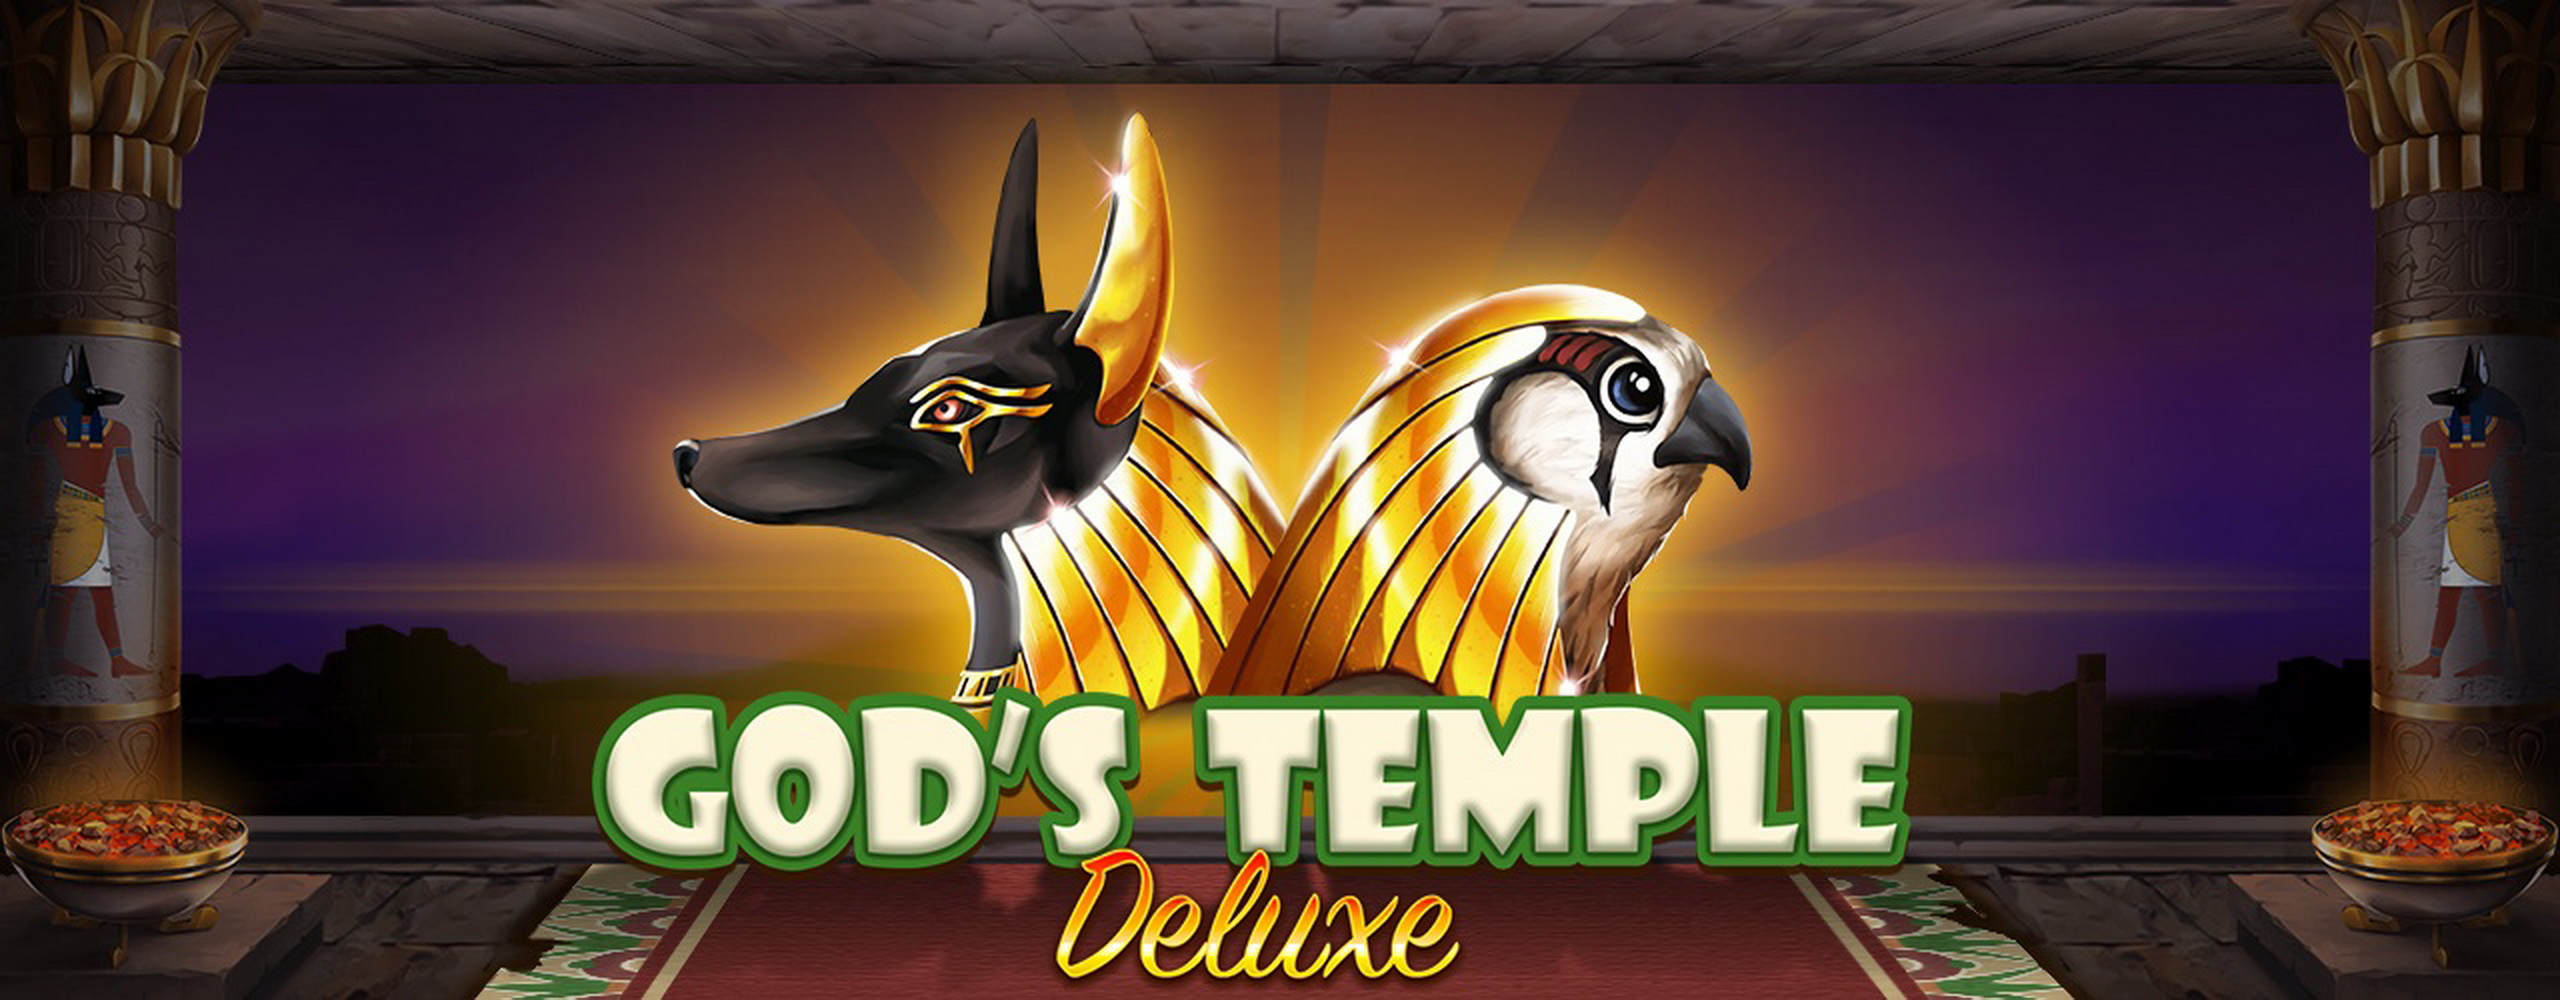 God's Temple Deluxe demo